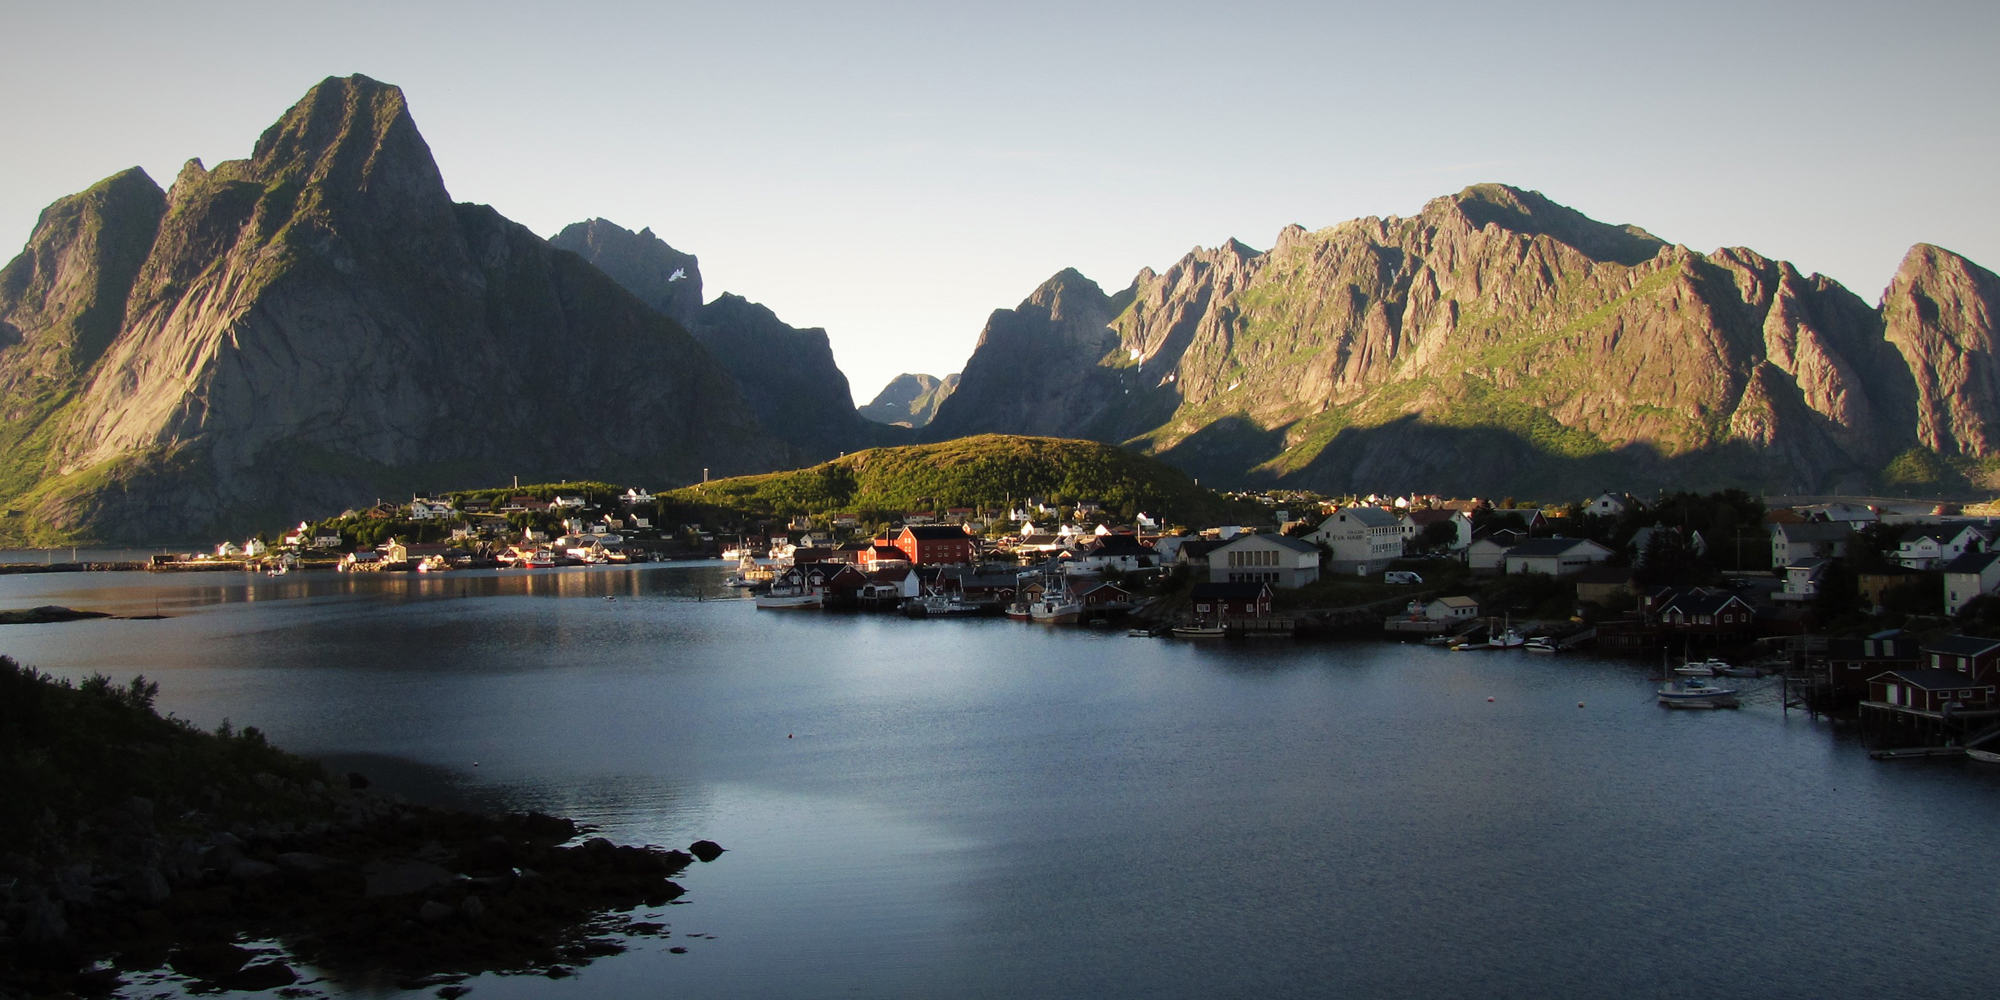 Day 9: the Lofoten Islands